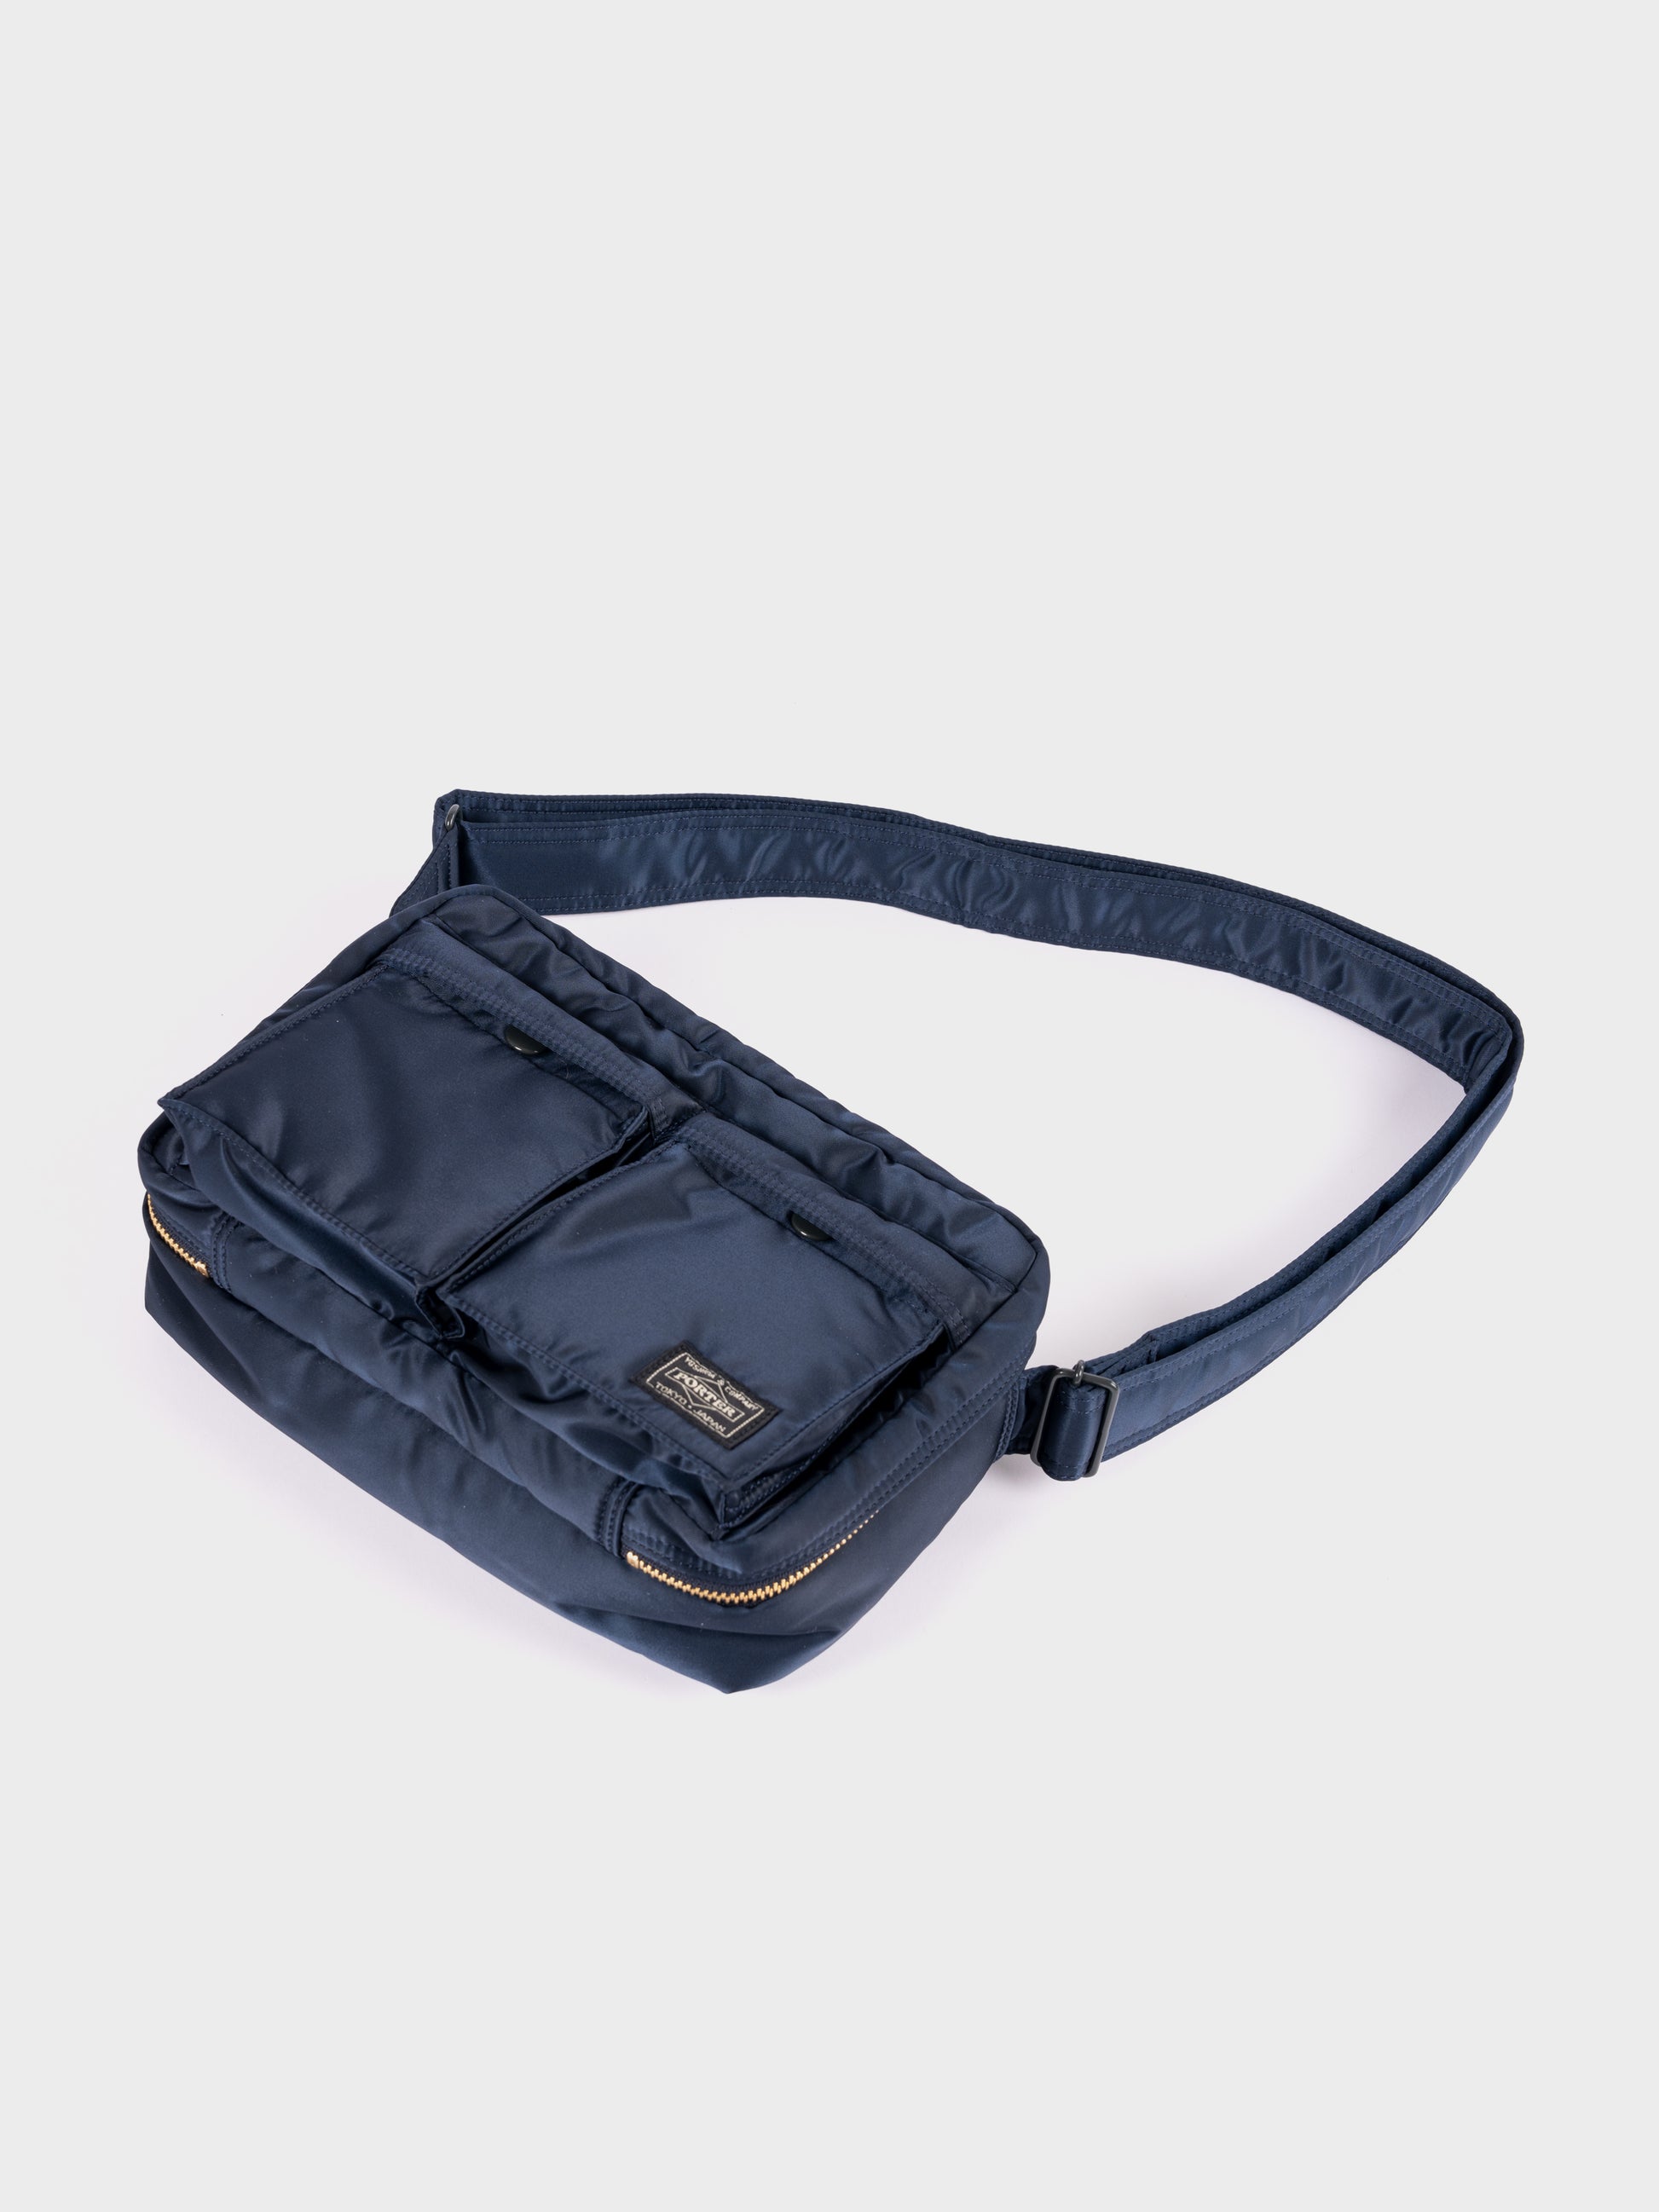 Porter-Yoshida & Co Tanker Shoulder Bag S - Iron Blue